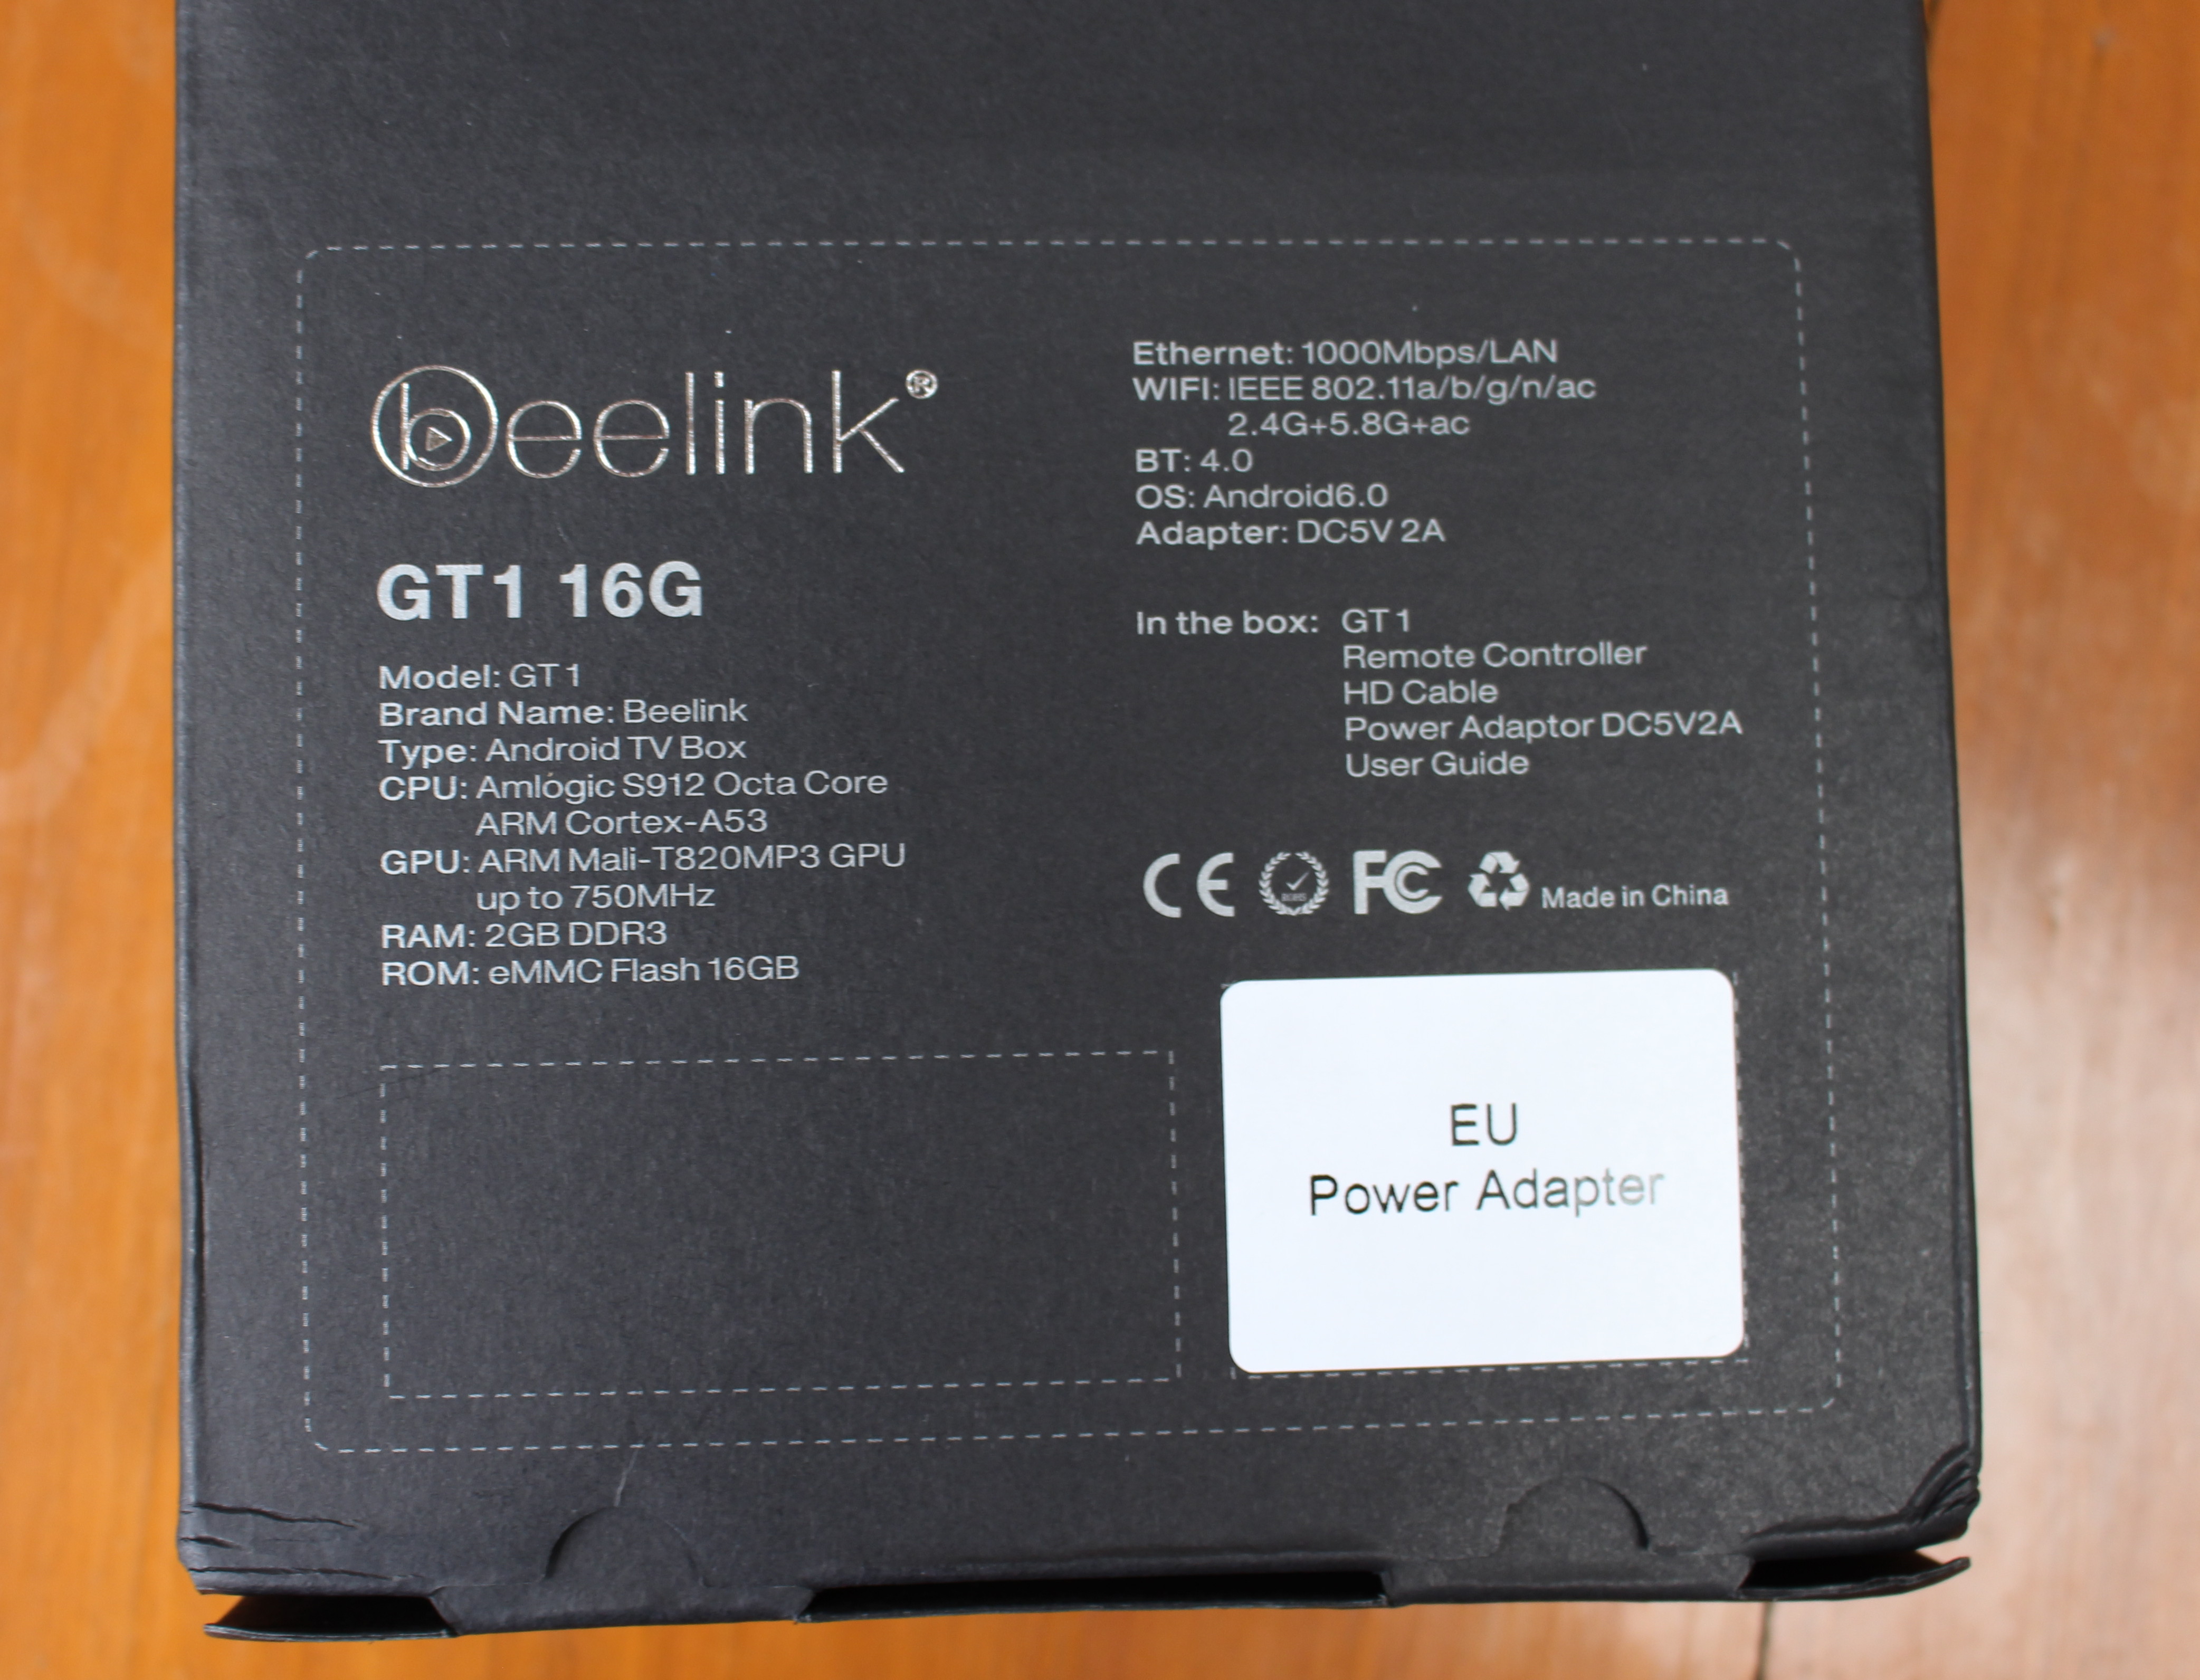 beelink-gt1-16g-specifications-large